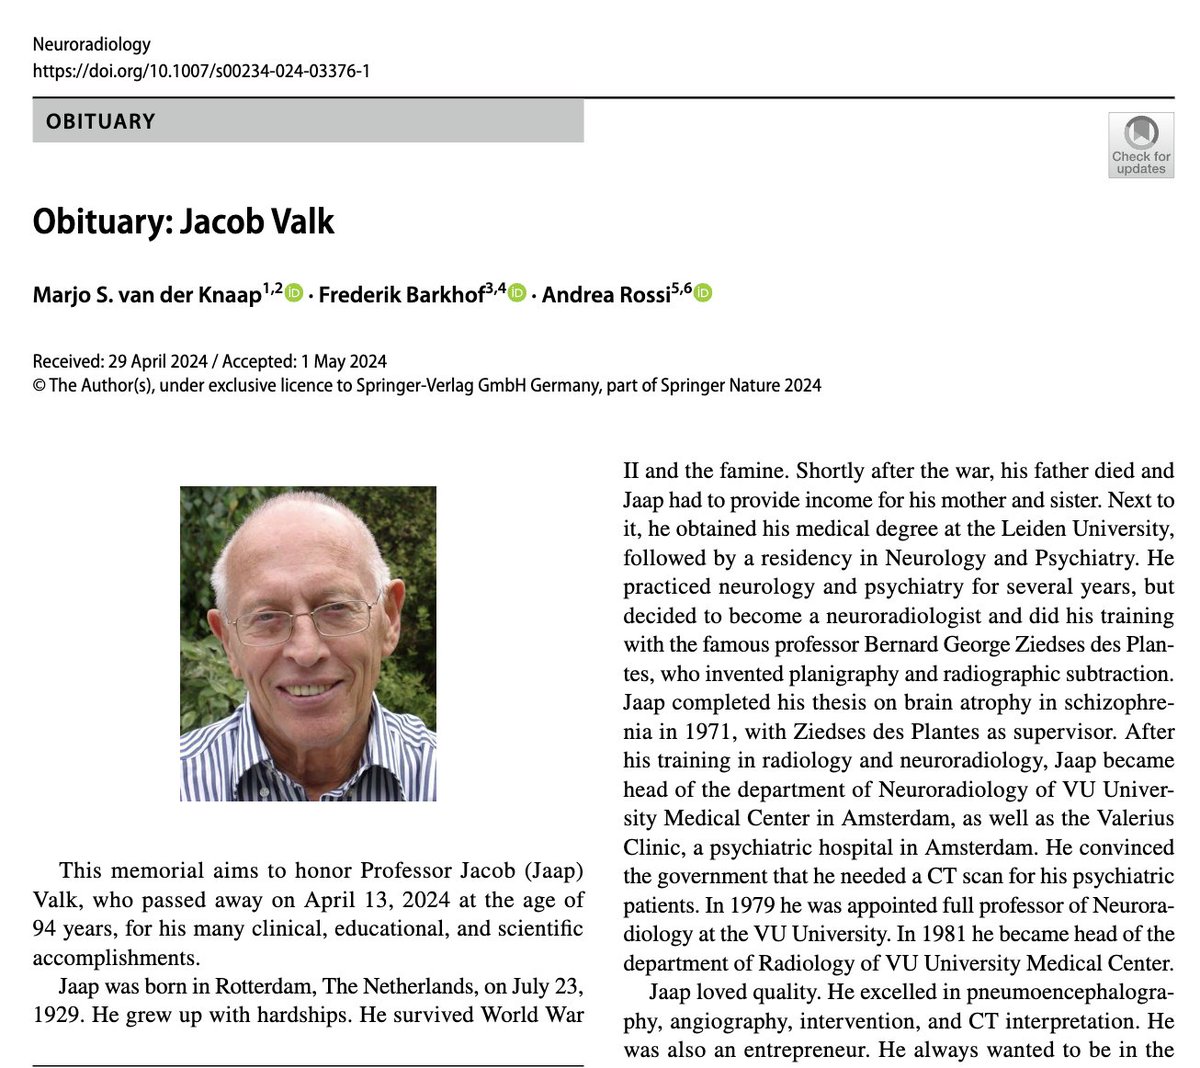 Obituary: Jacob Valk
#Neurorad #Neuroradiology
rdcu.be/dHJZ3